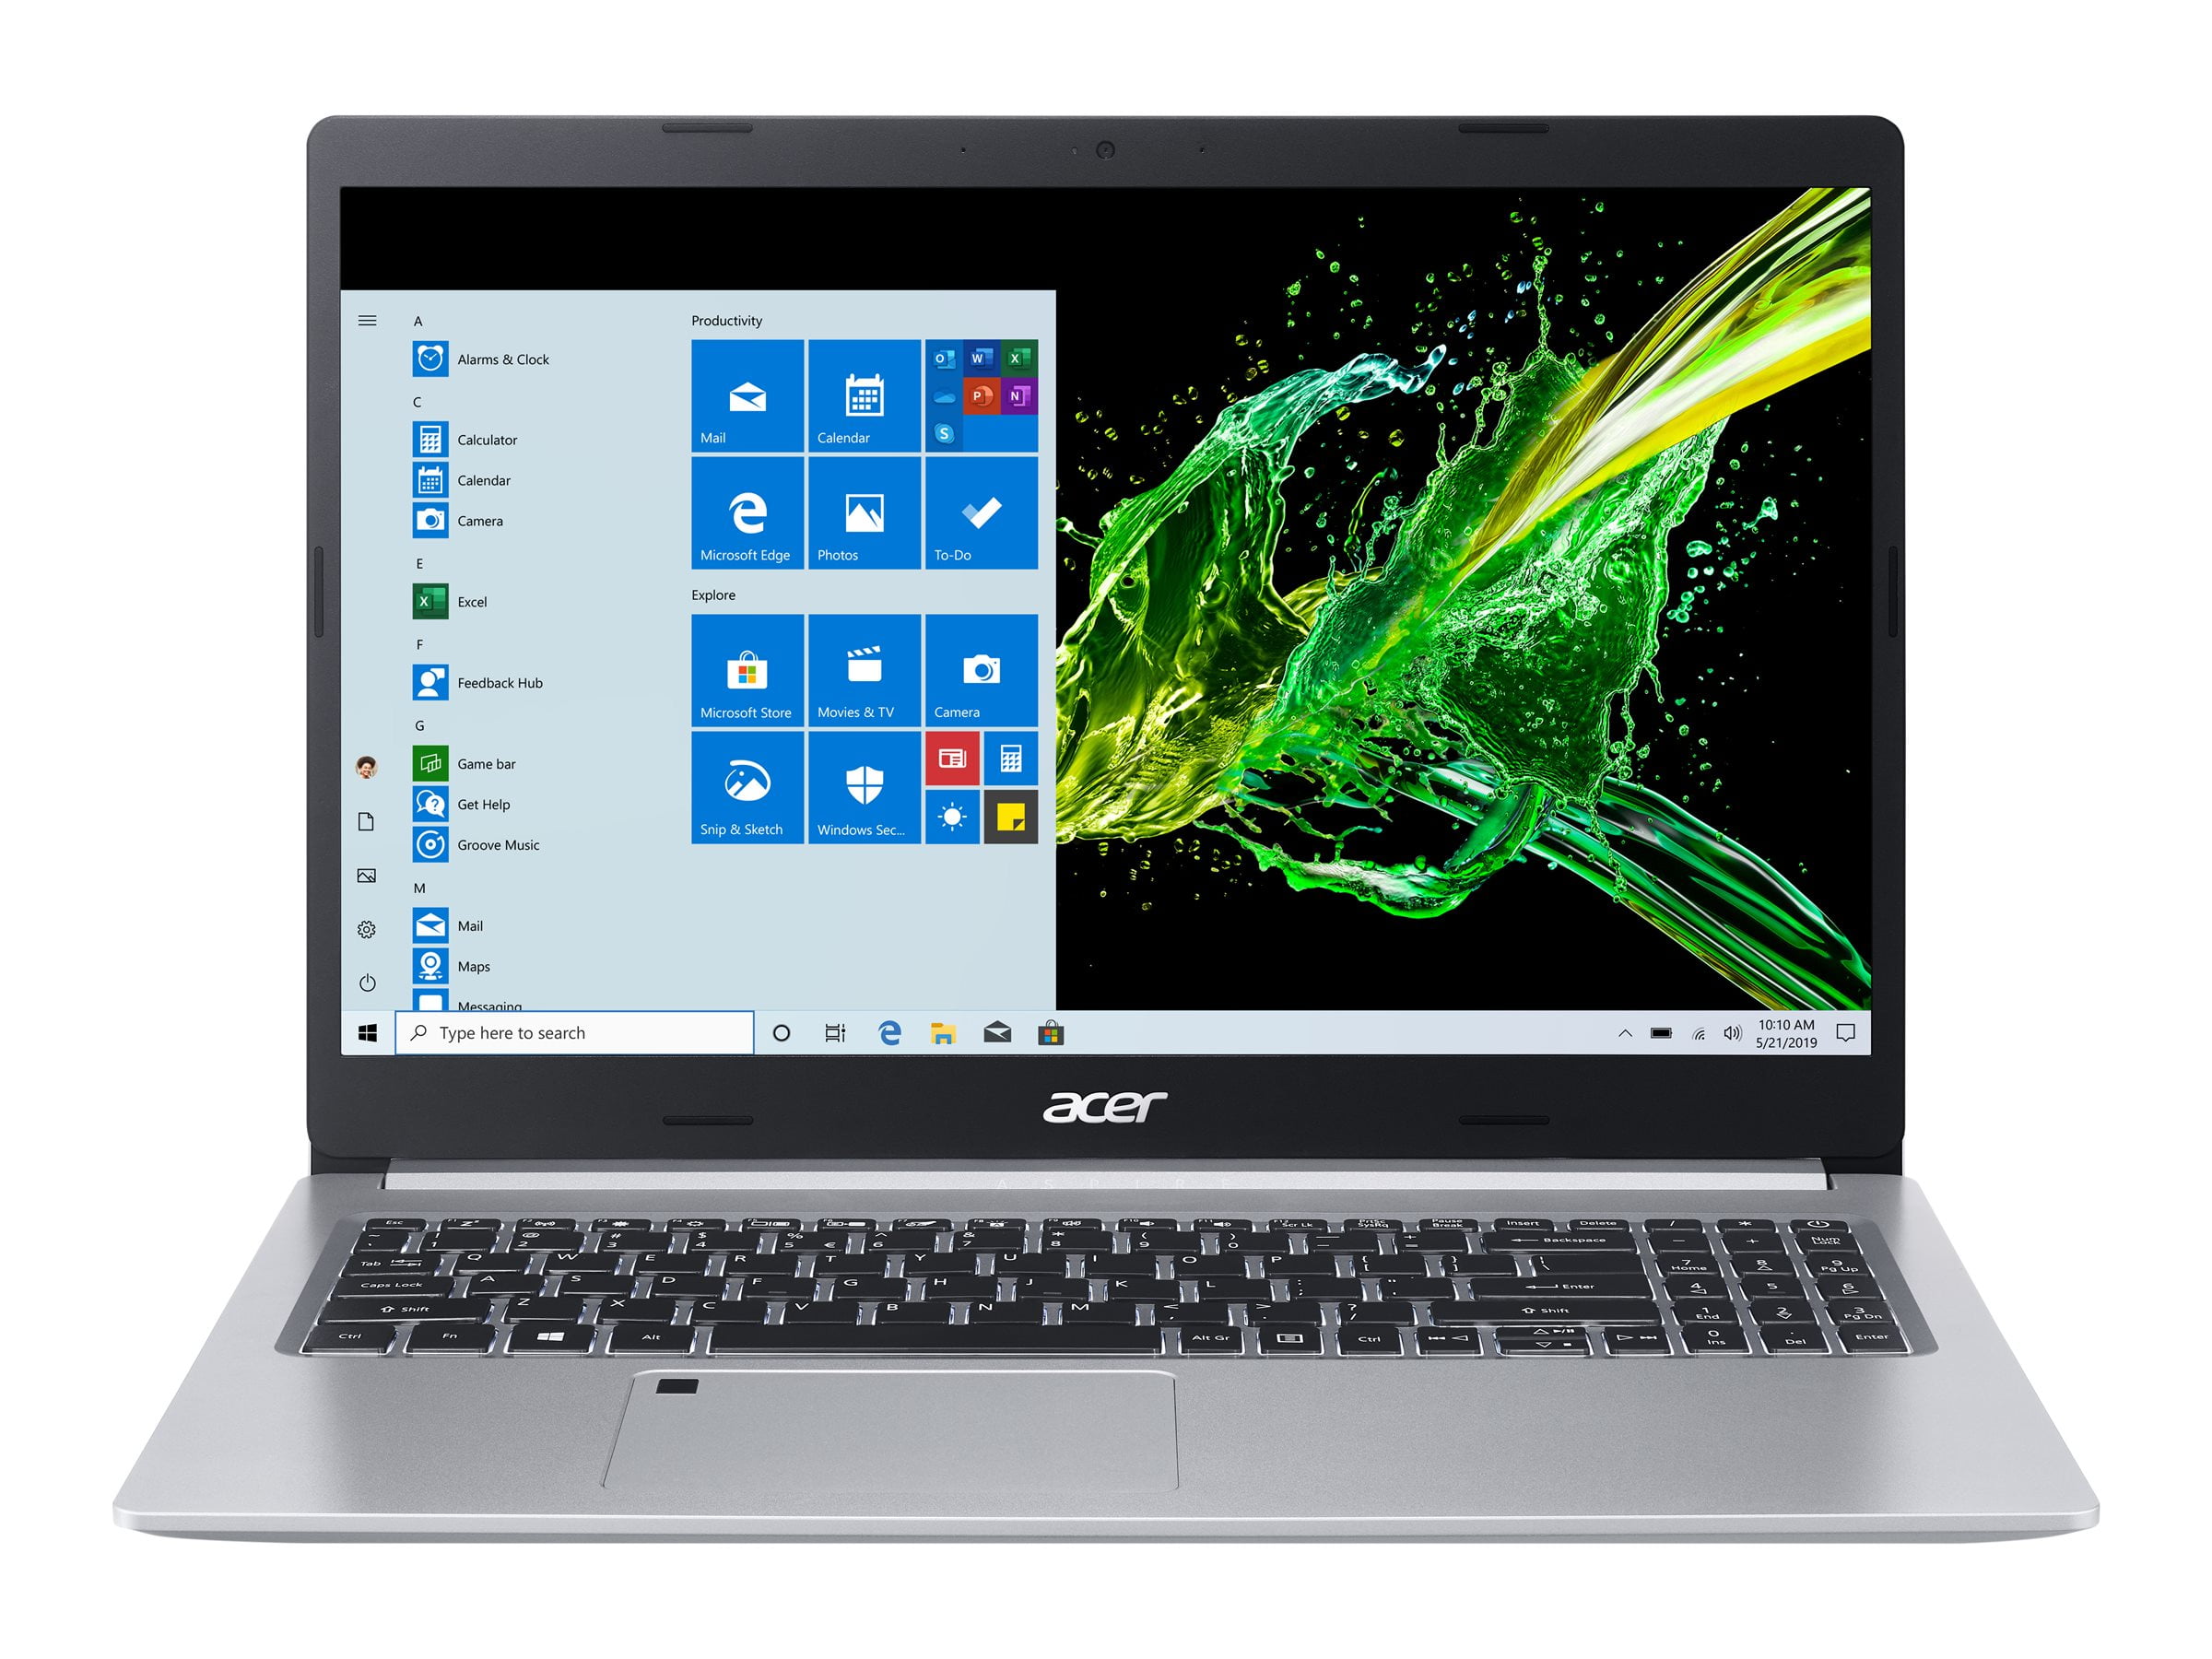 Acer Aspire 5 A515-55-56VK - Core i5 1035G1 / 1 GHz - Win 10 Home 64-bit -  8 GB RAM - 256 GB SSD - 15.6